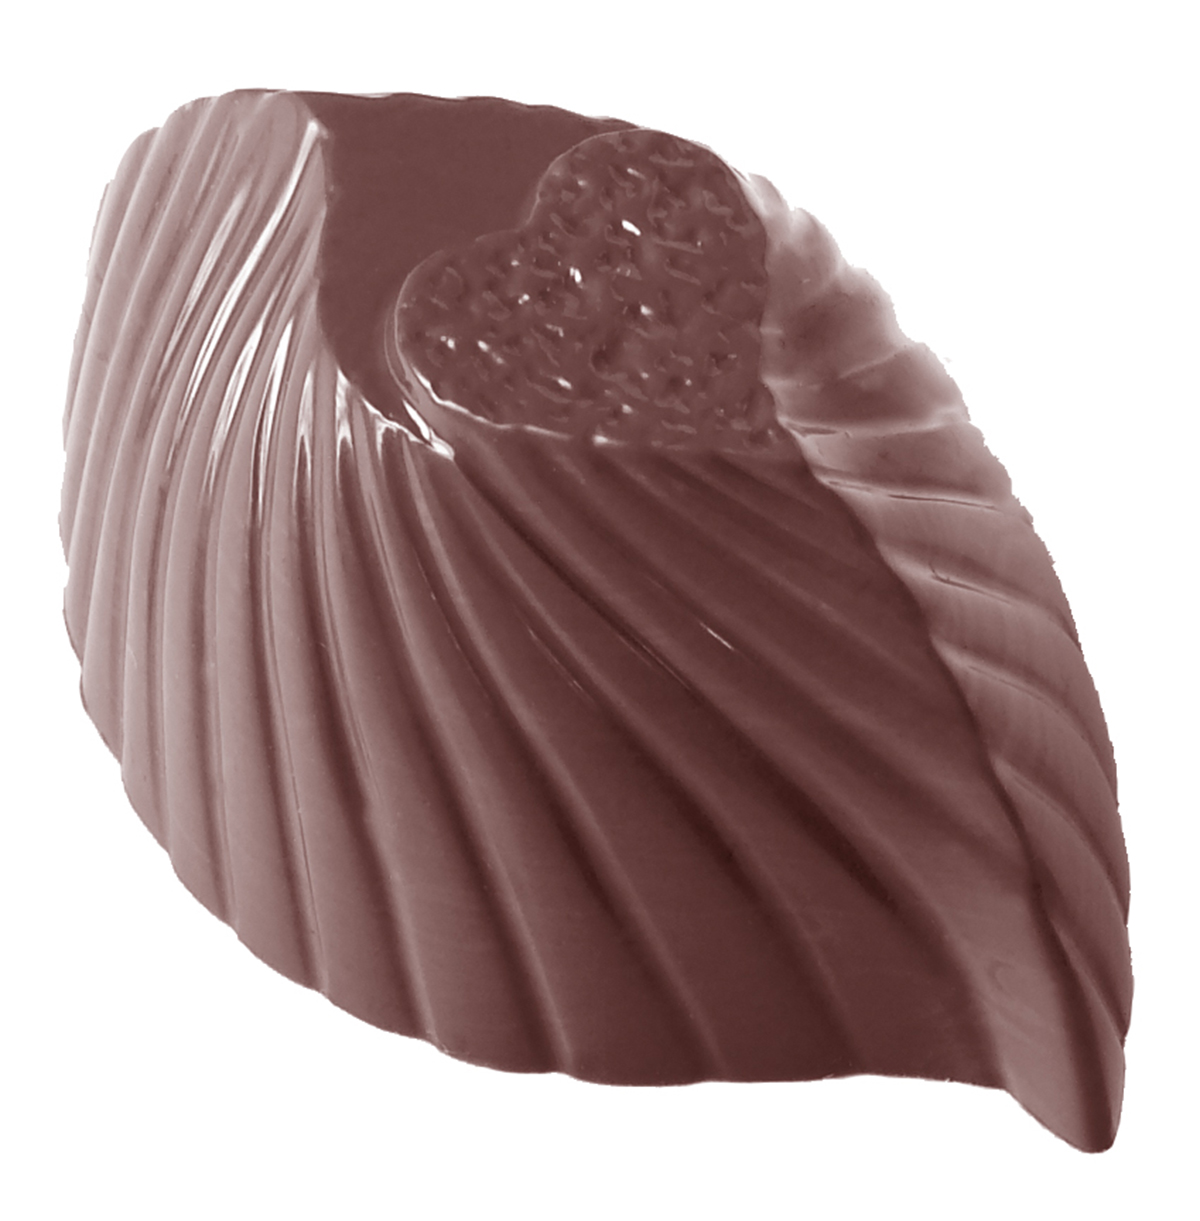 Professionel chokoladeform i polycarbonat - Classy heart CW1517